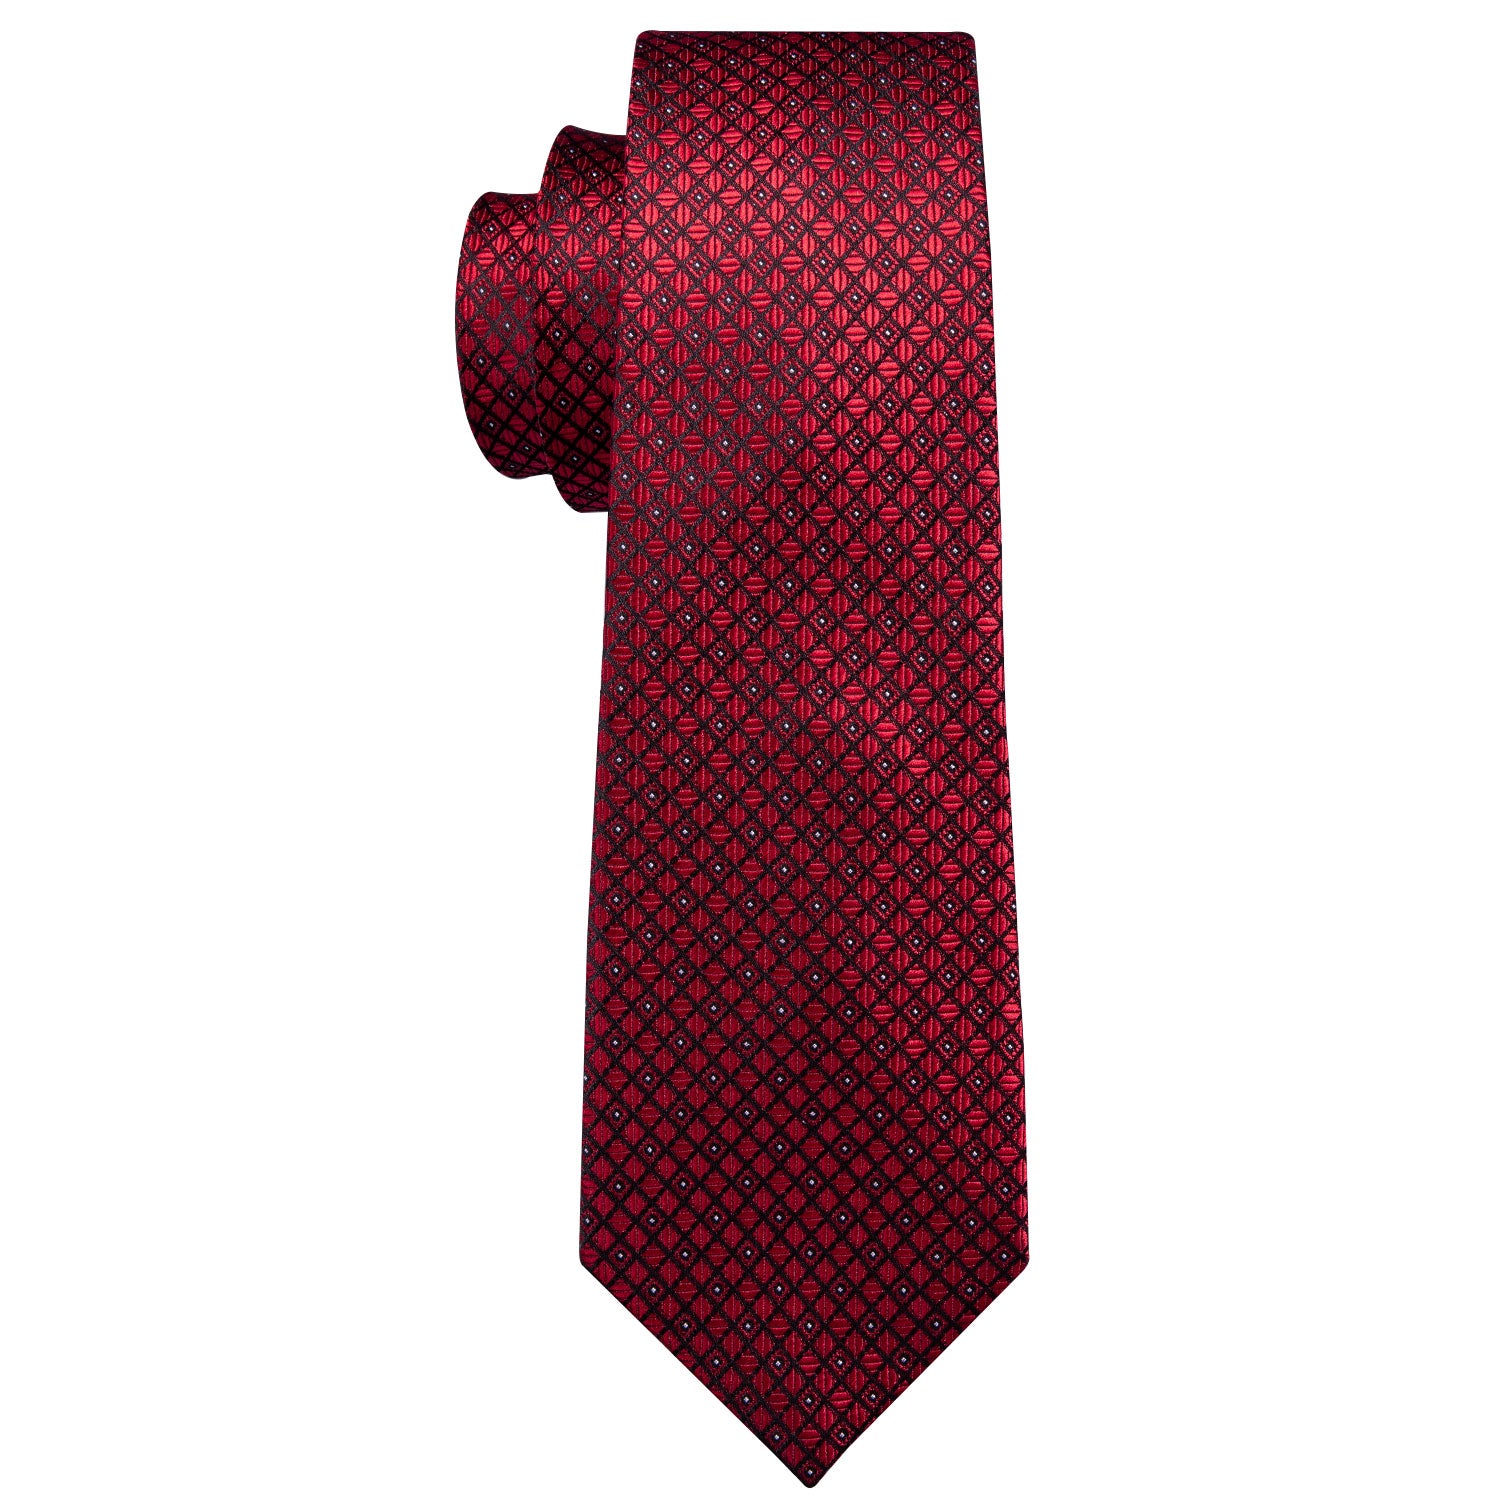 Red Plaid Men's Tie Pocket Square Cufflinks Set